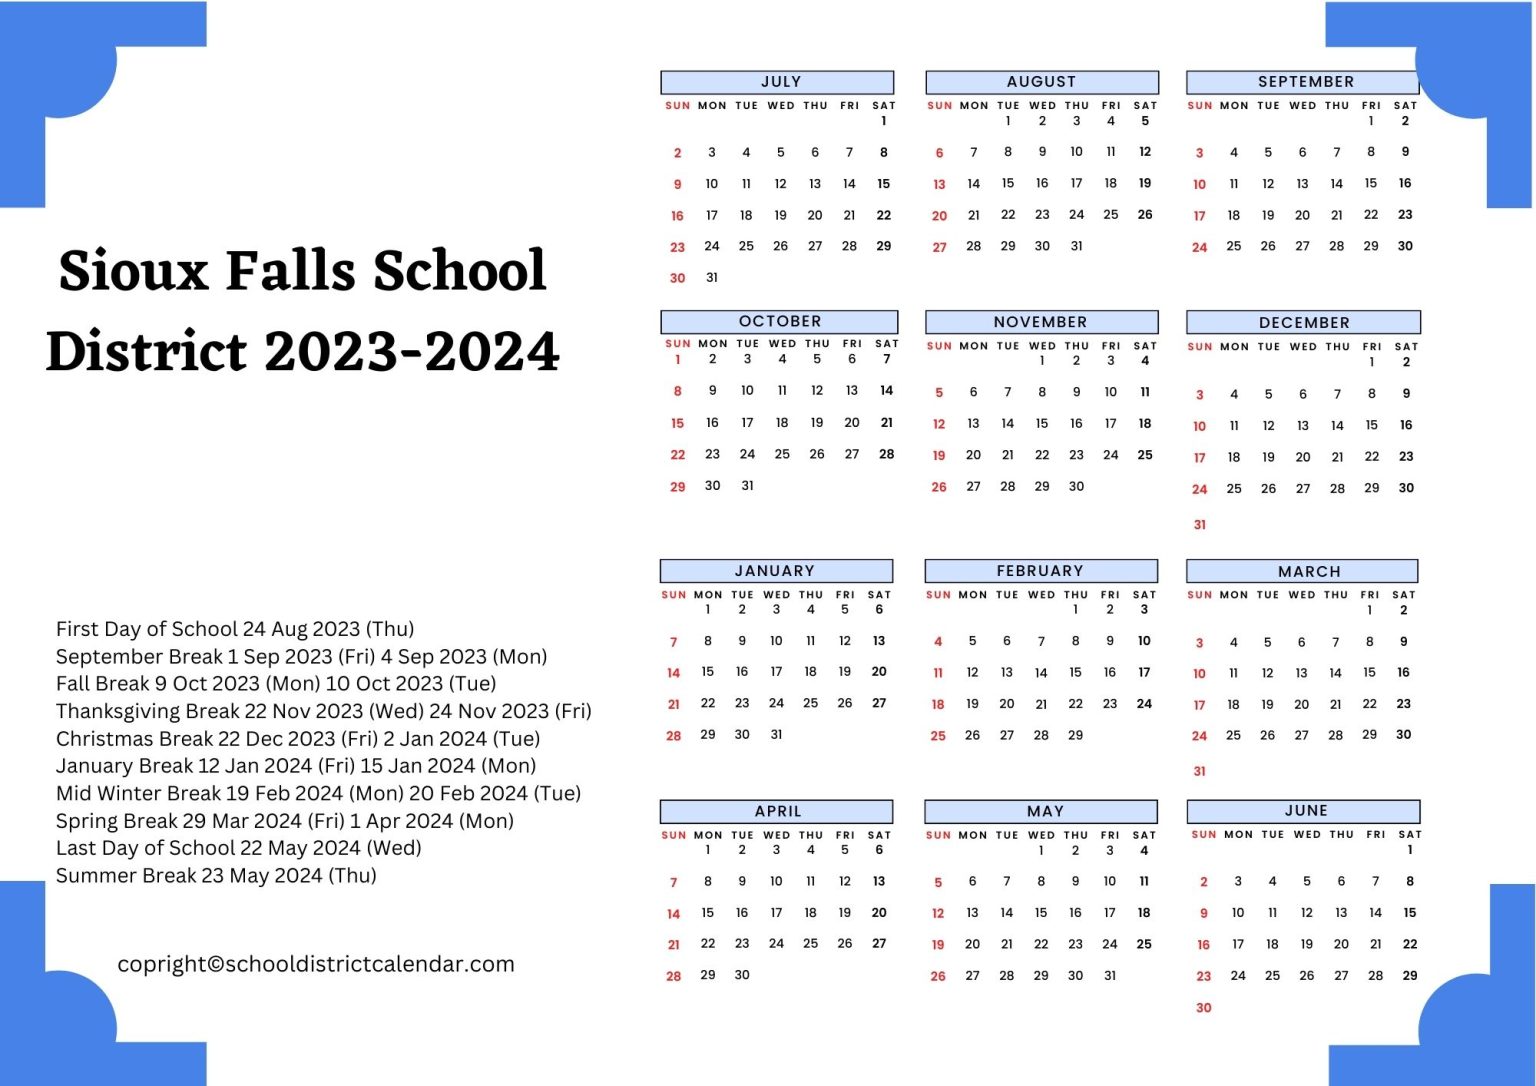 Sioux Falls School District Calendar Holidays 20232024